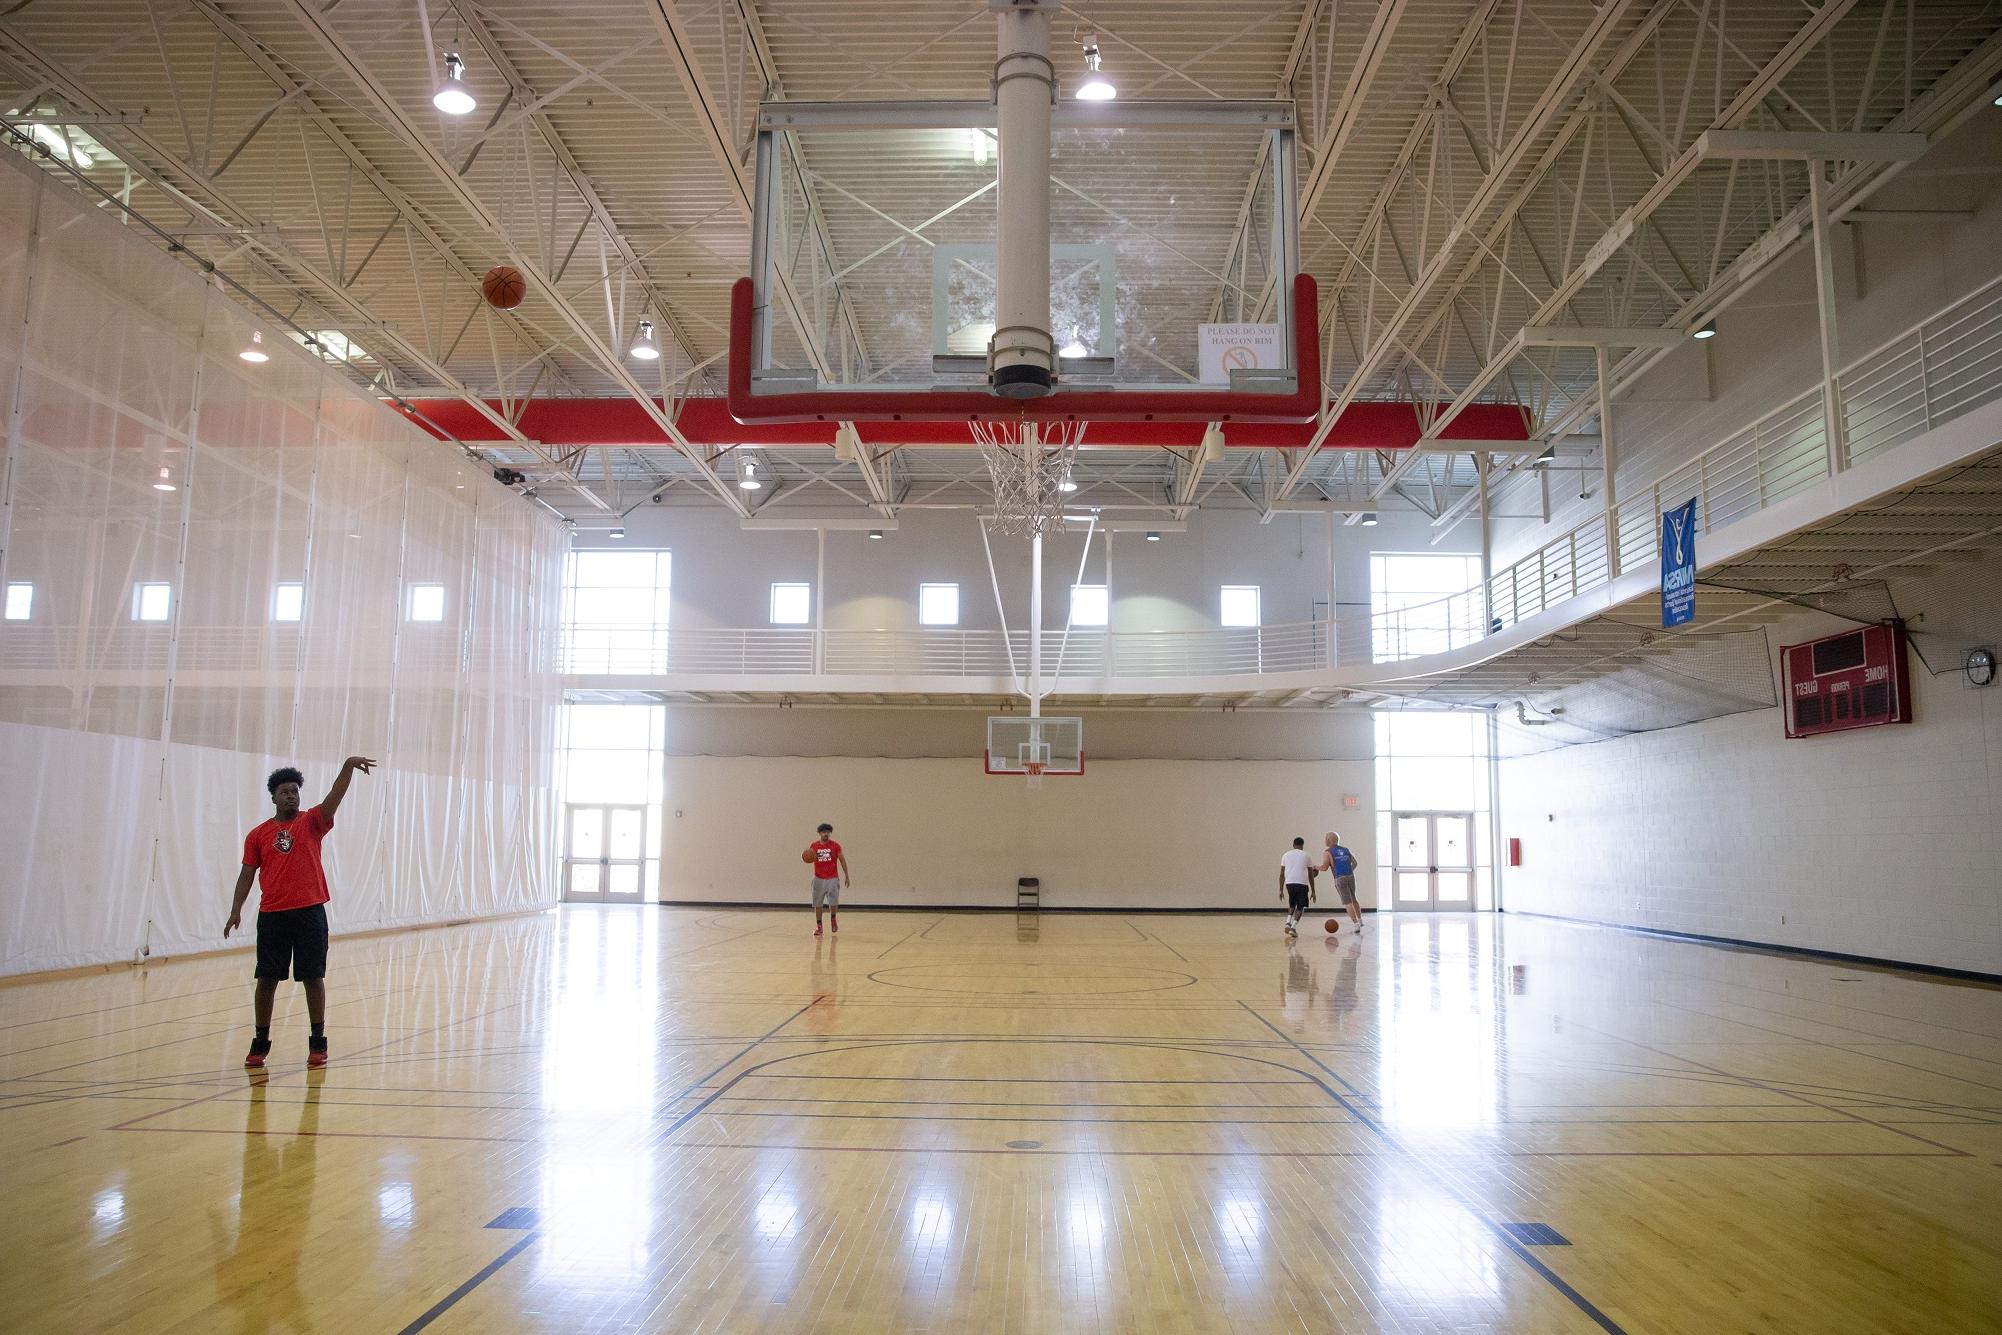 student shooting hoops on foy basketball court